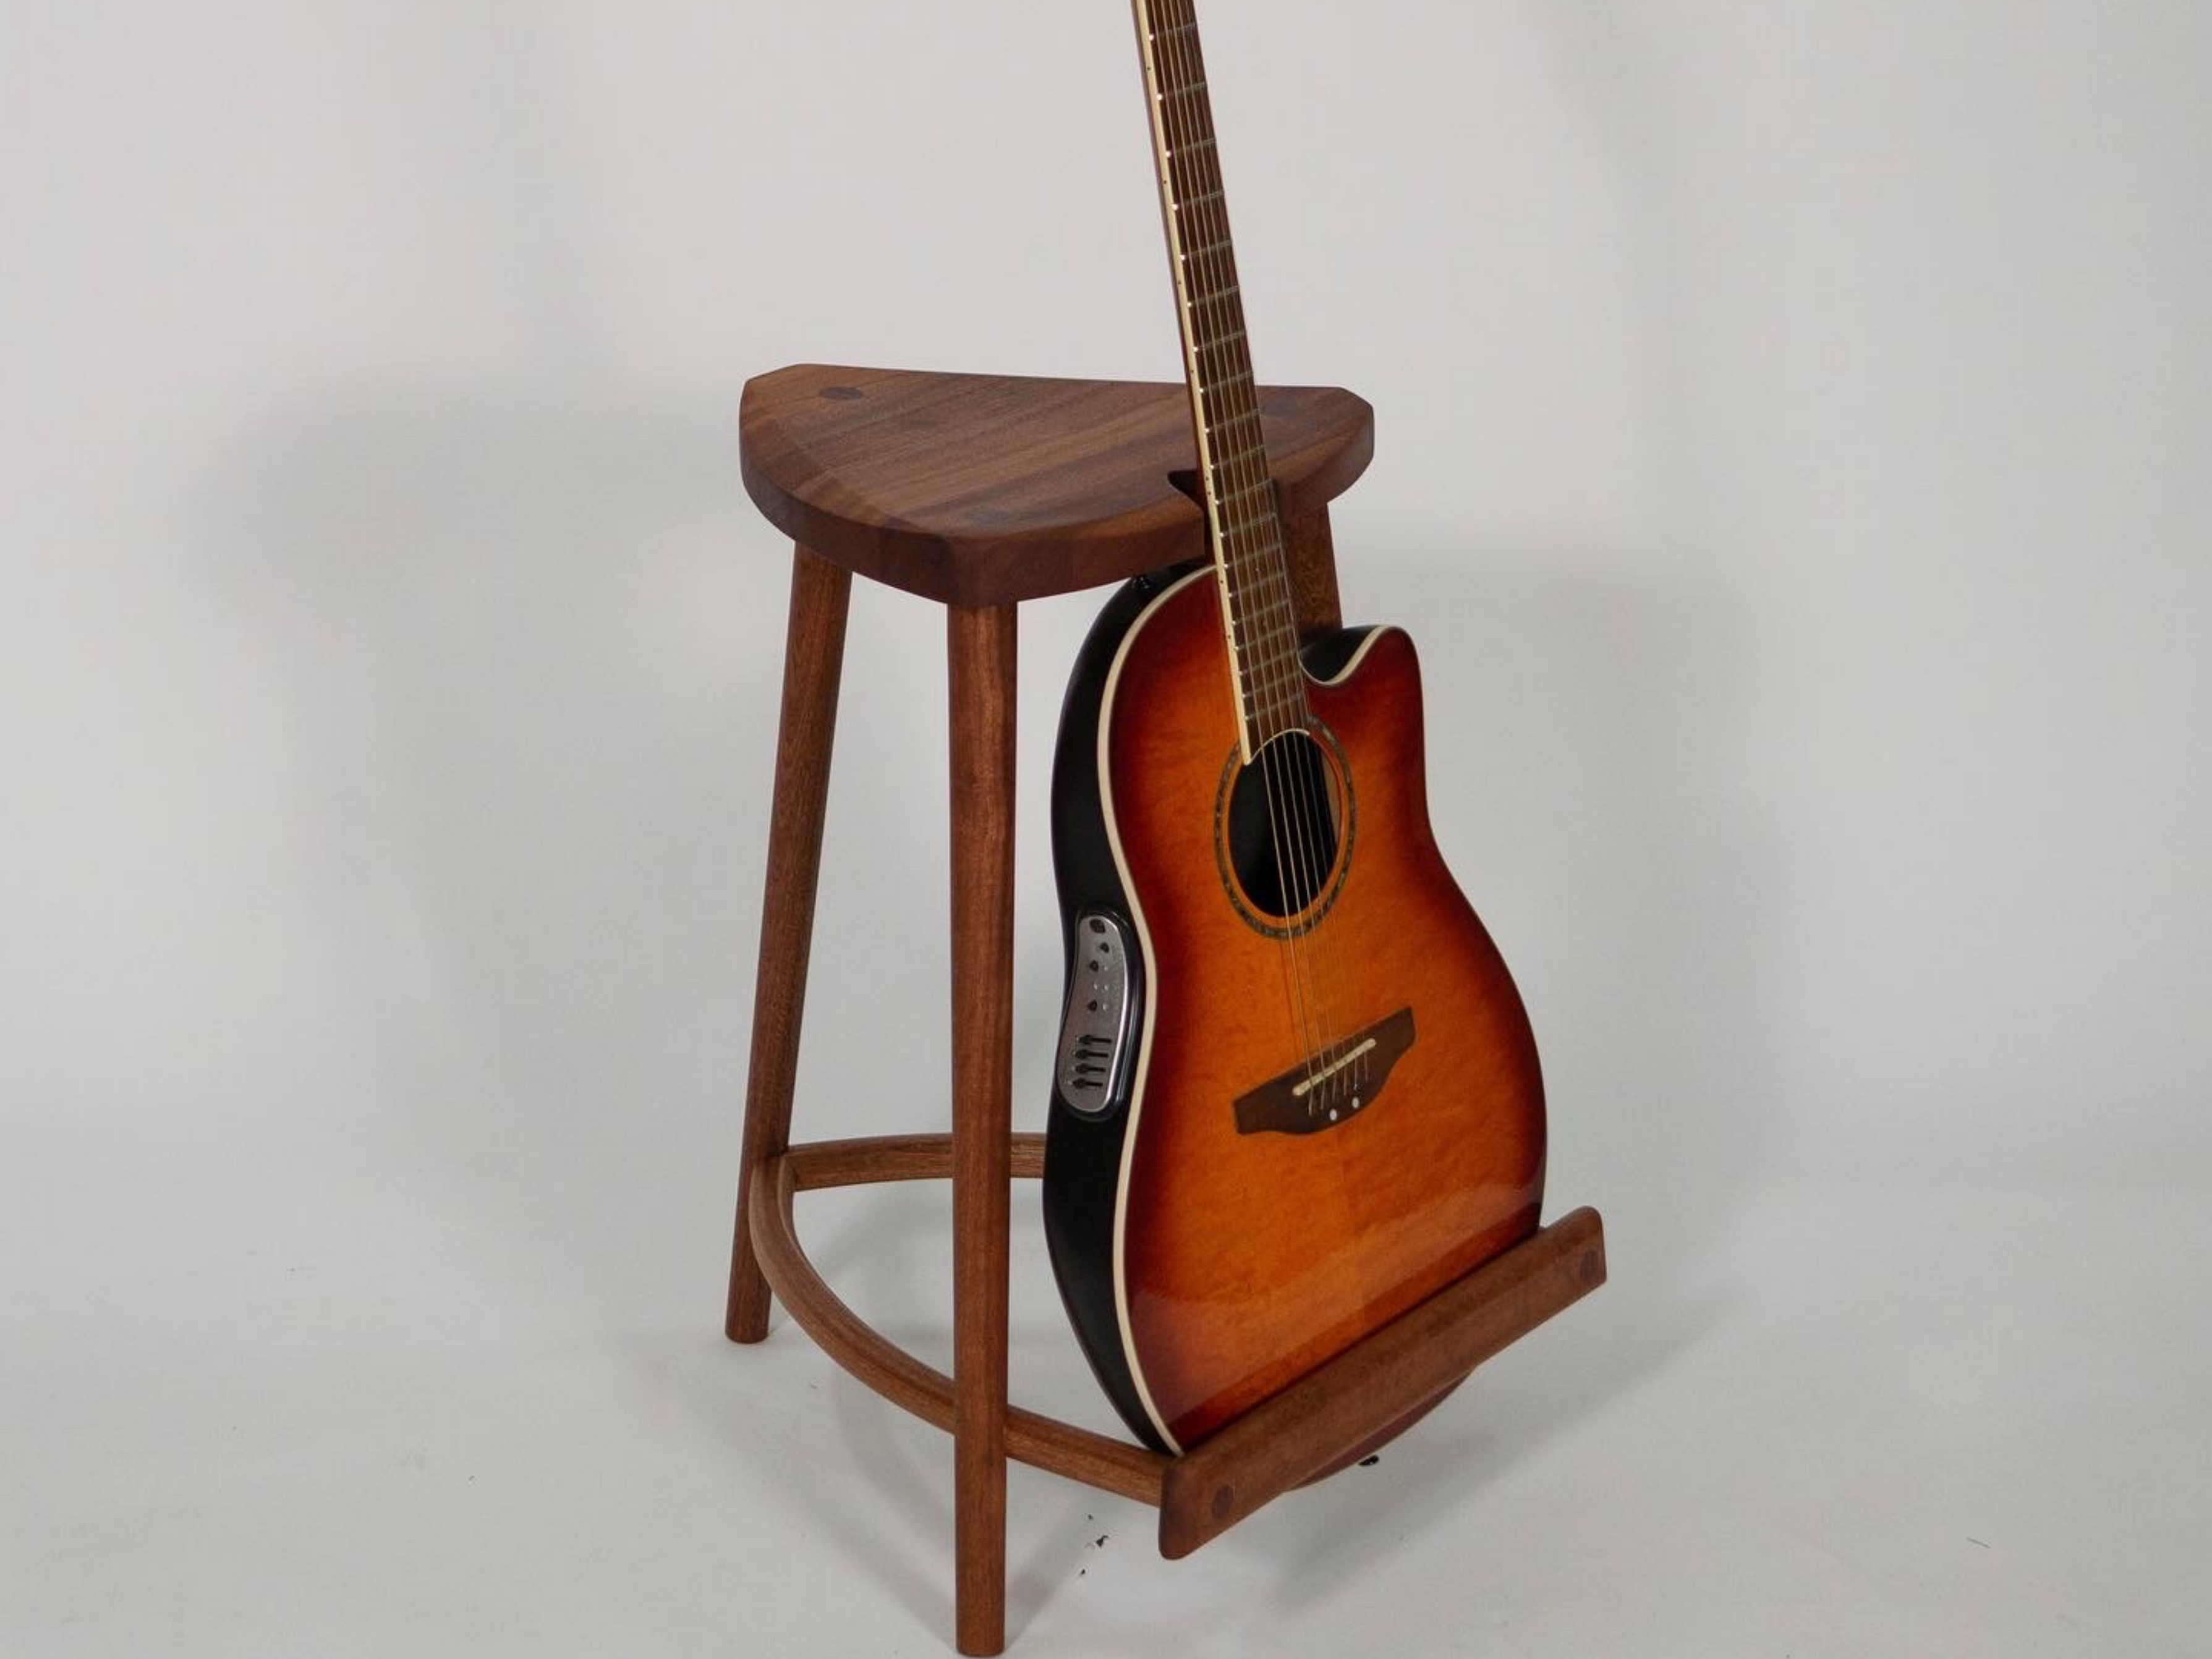 Stool guitar holder designed by Addison